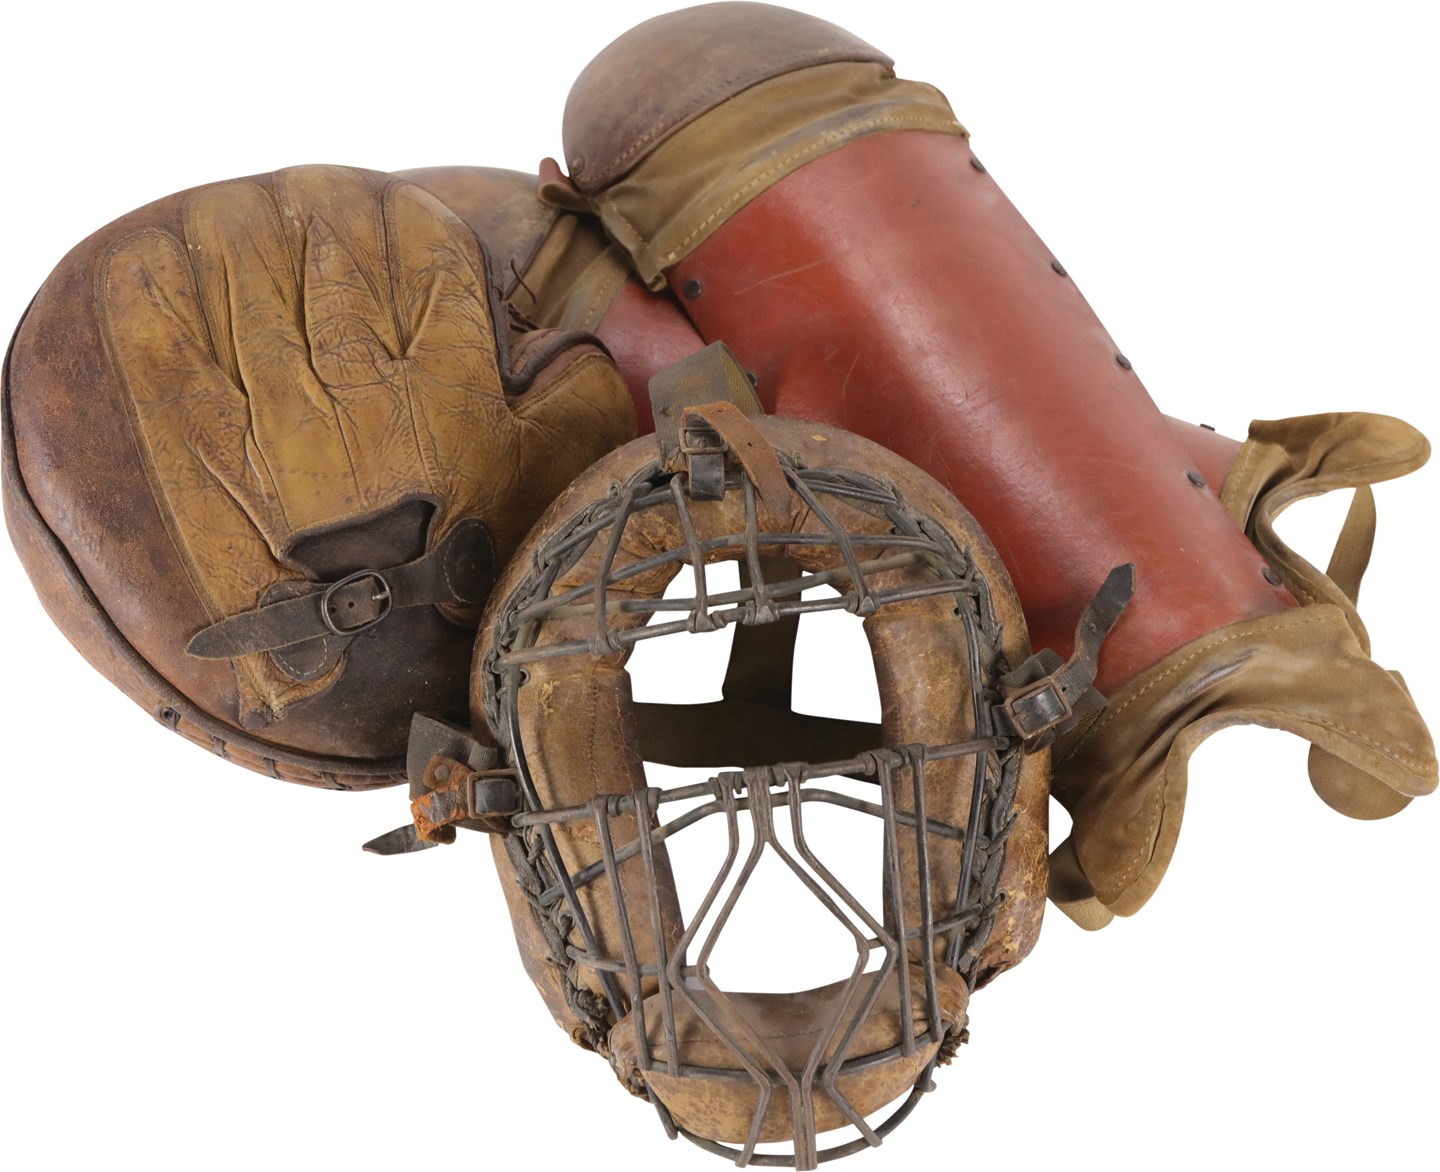 Early 1900s Catcher's Equipment